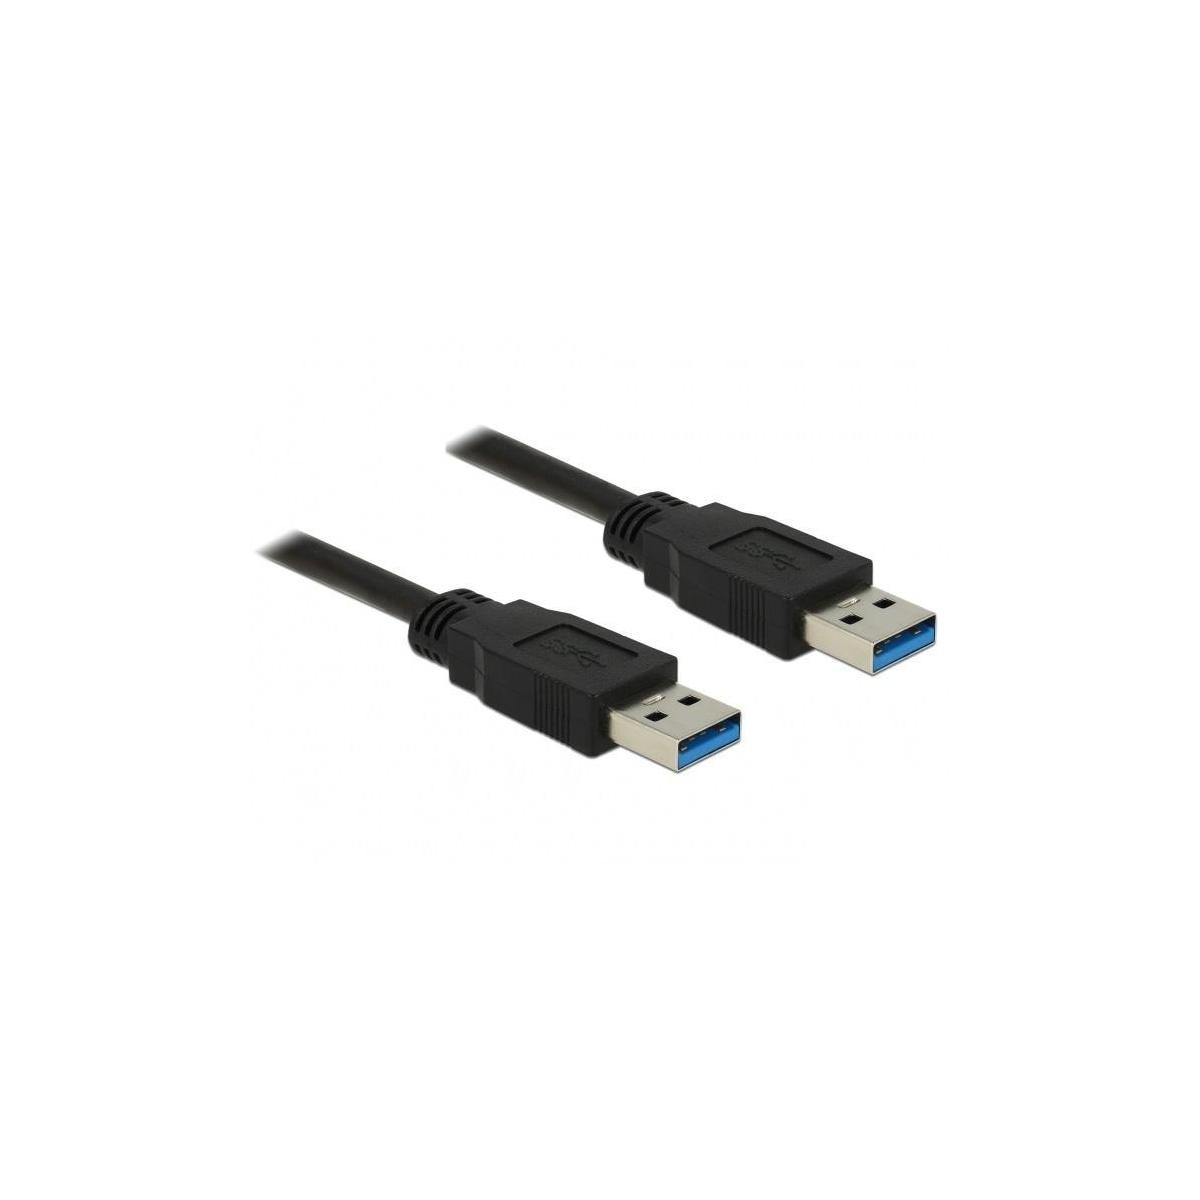 A 3.00m Multimedia-Technik mehrfarbig A -<gt/> USB3.0 Delock schwarz Kabel USB DELOCK St/St Stecker/Steckverbinder,